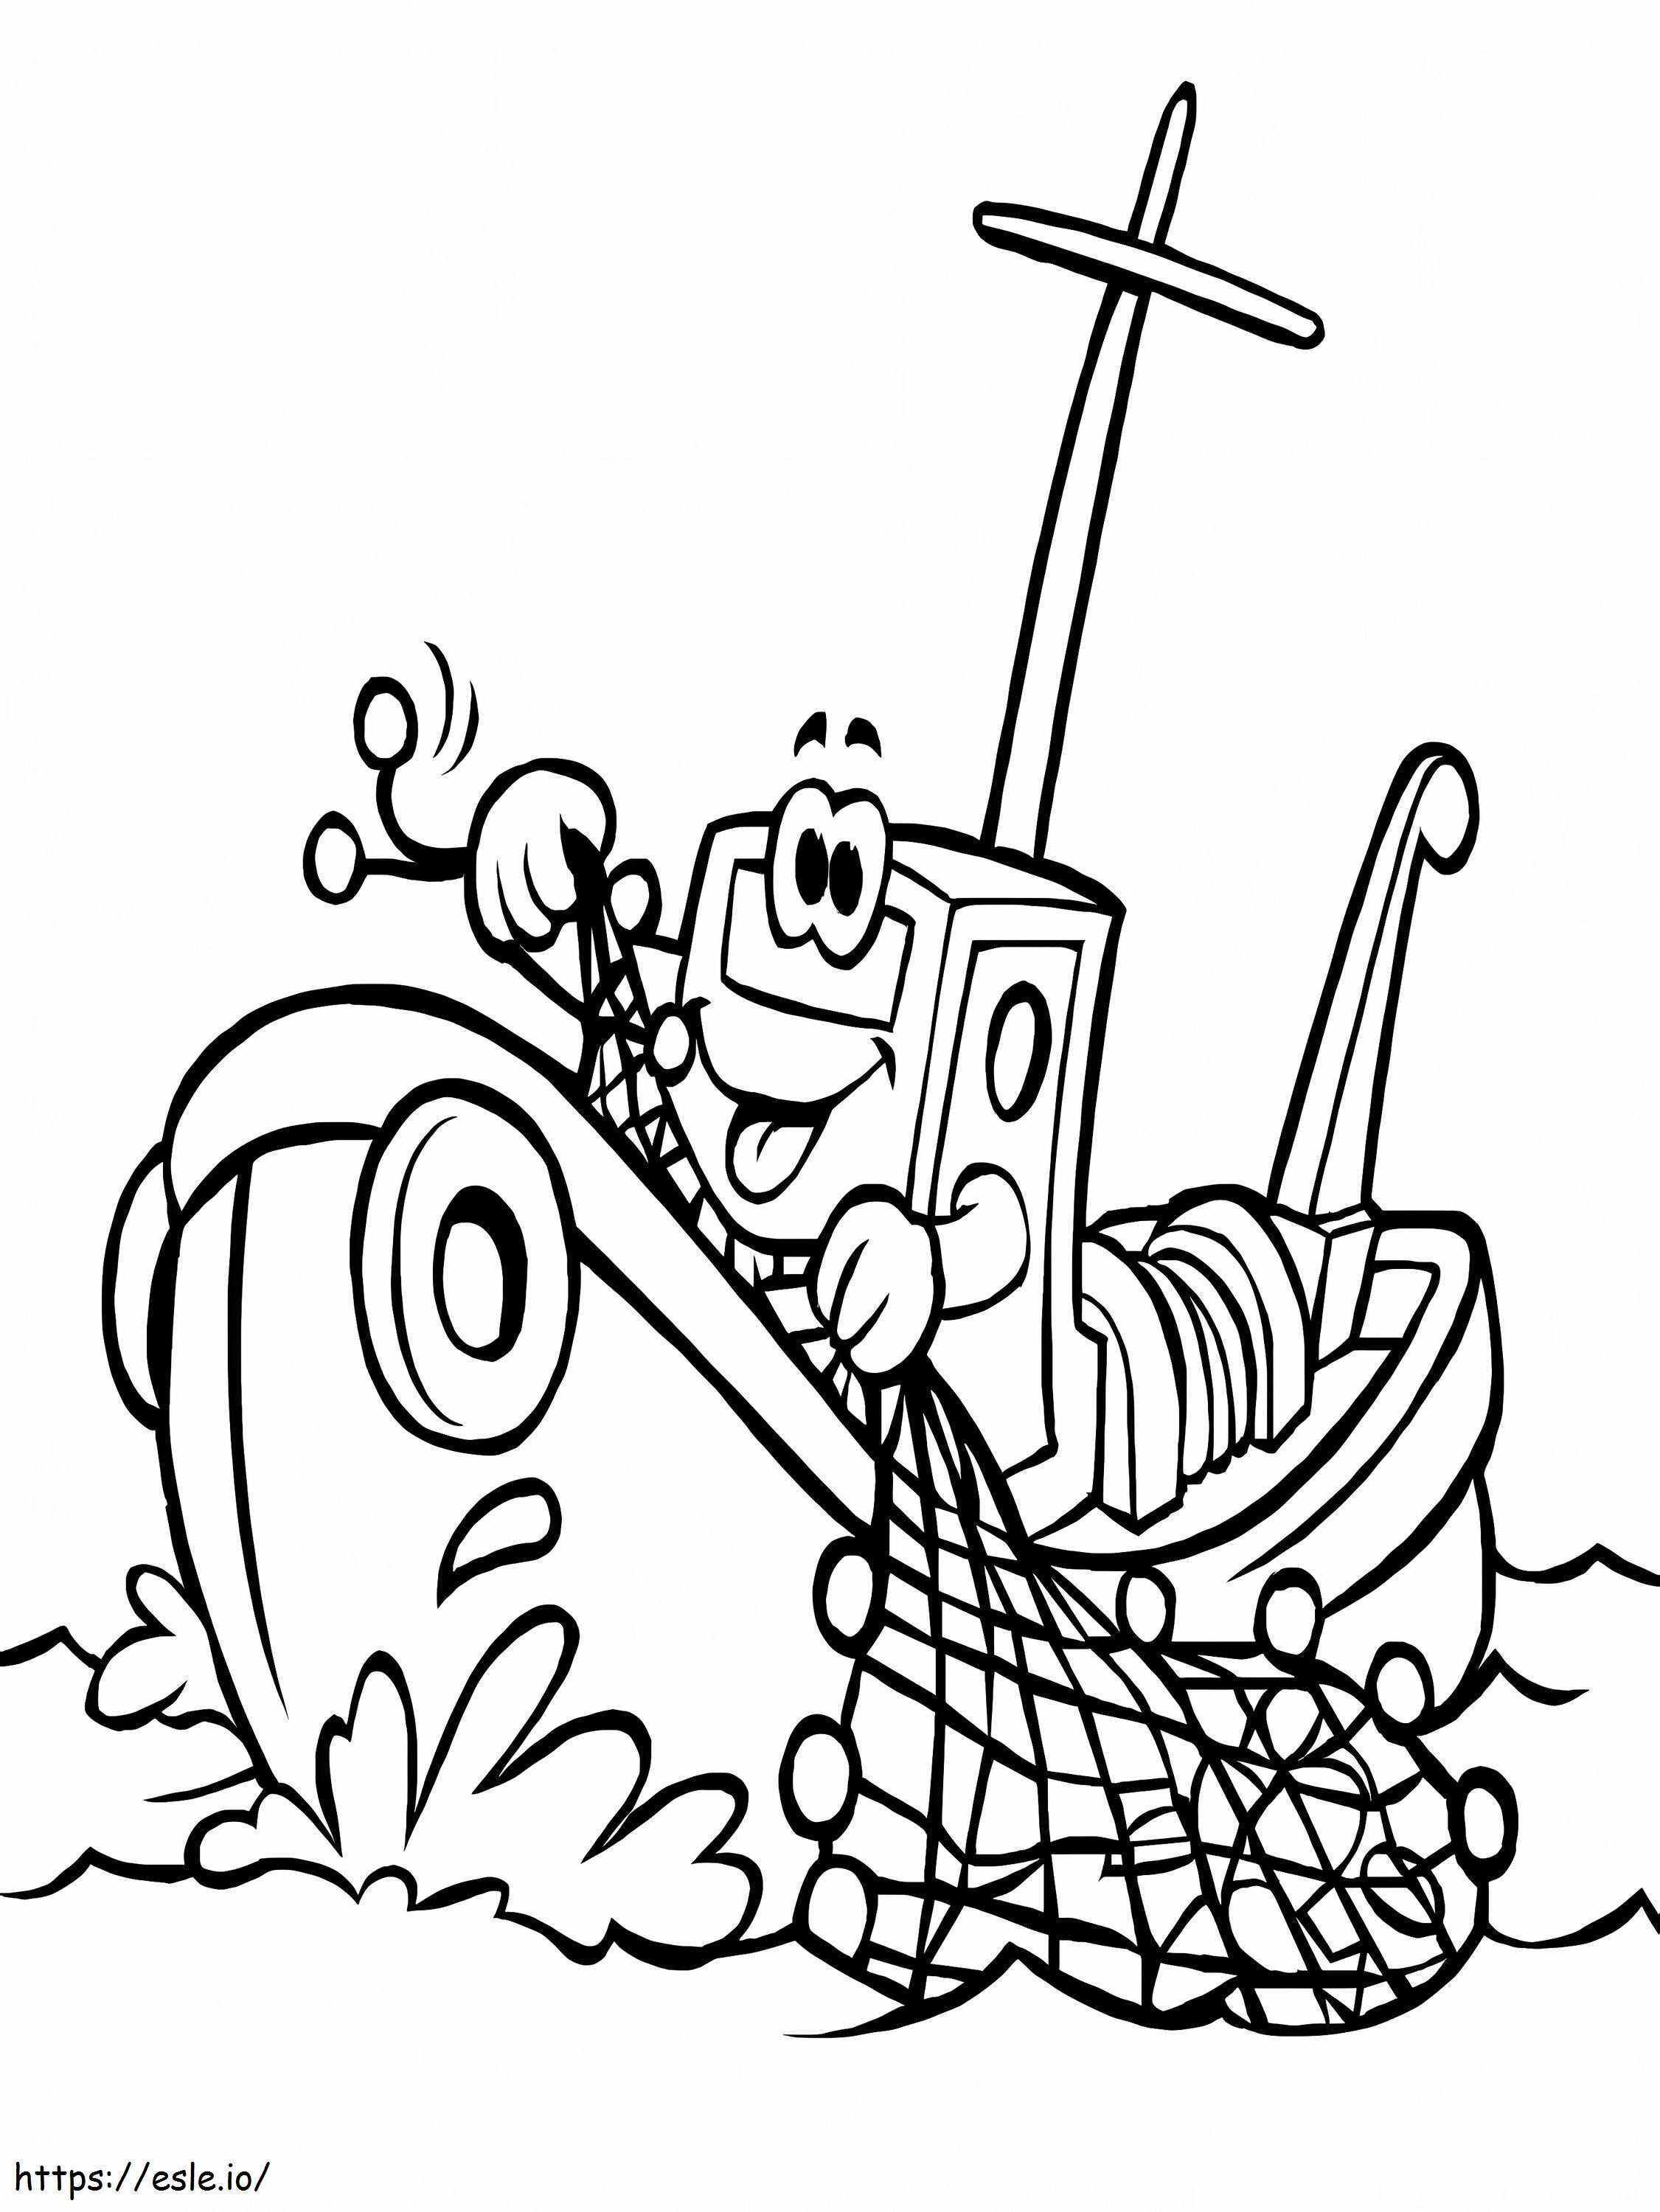 Kreskówka łódź rybacka kolorowanka